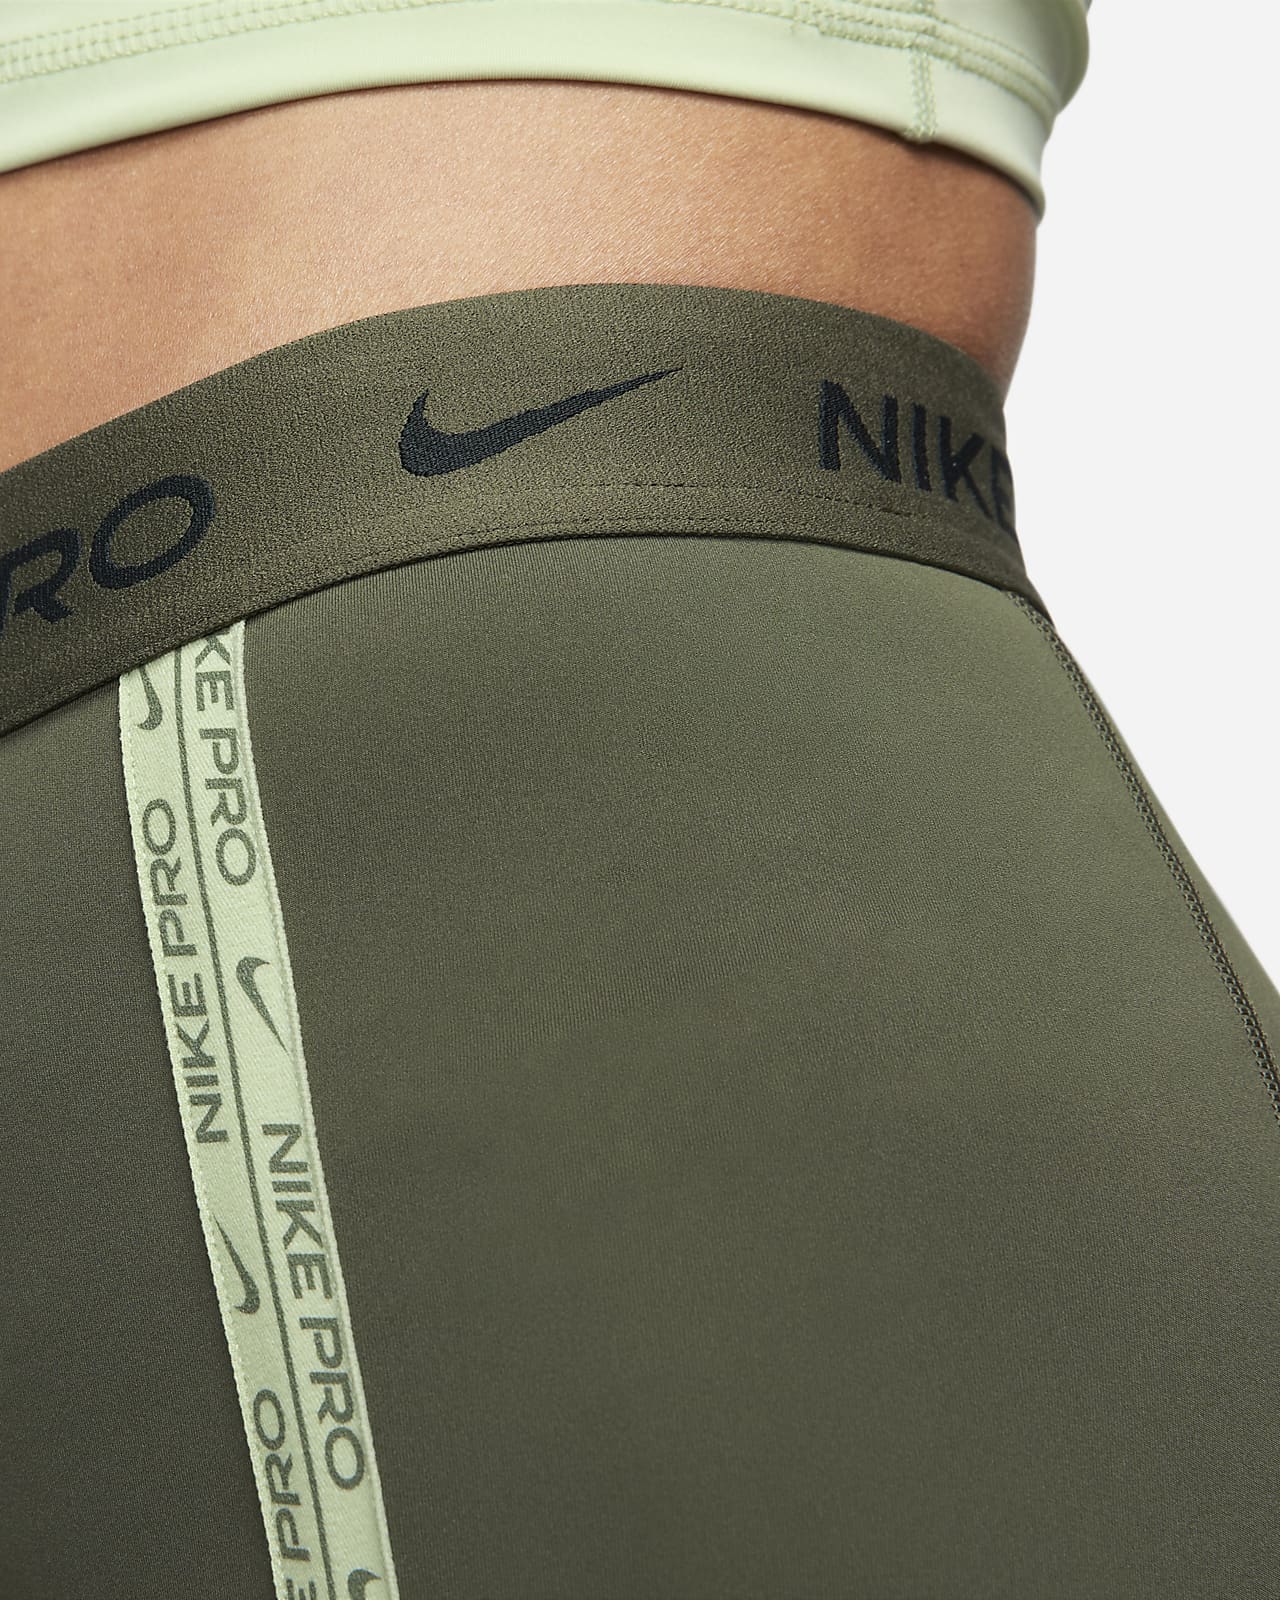 Nike Pro 3 Haze Women's Shorts (Sport Fuschia/Black/White, X